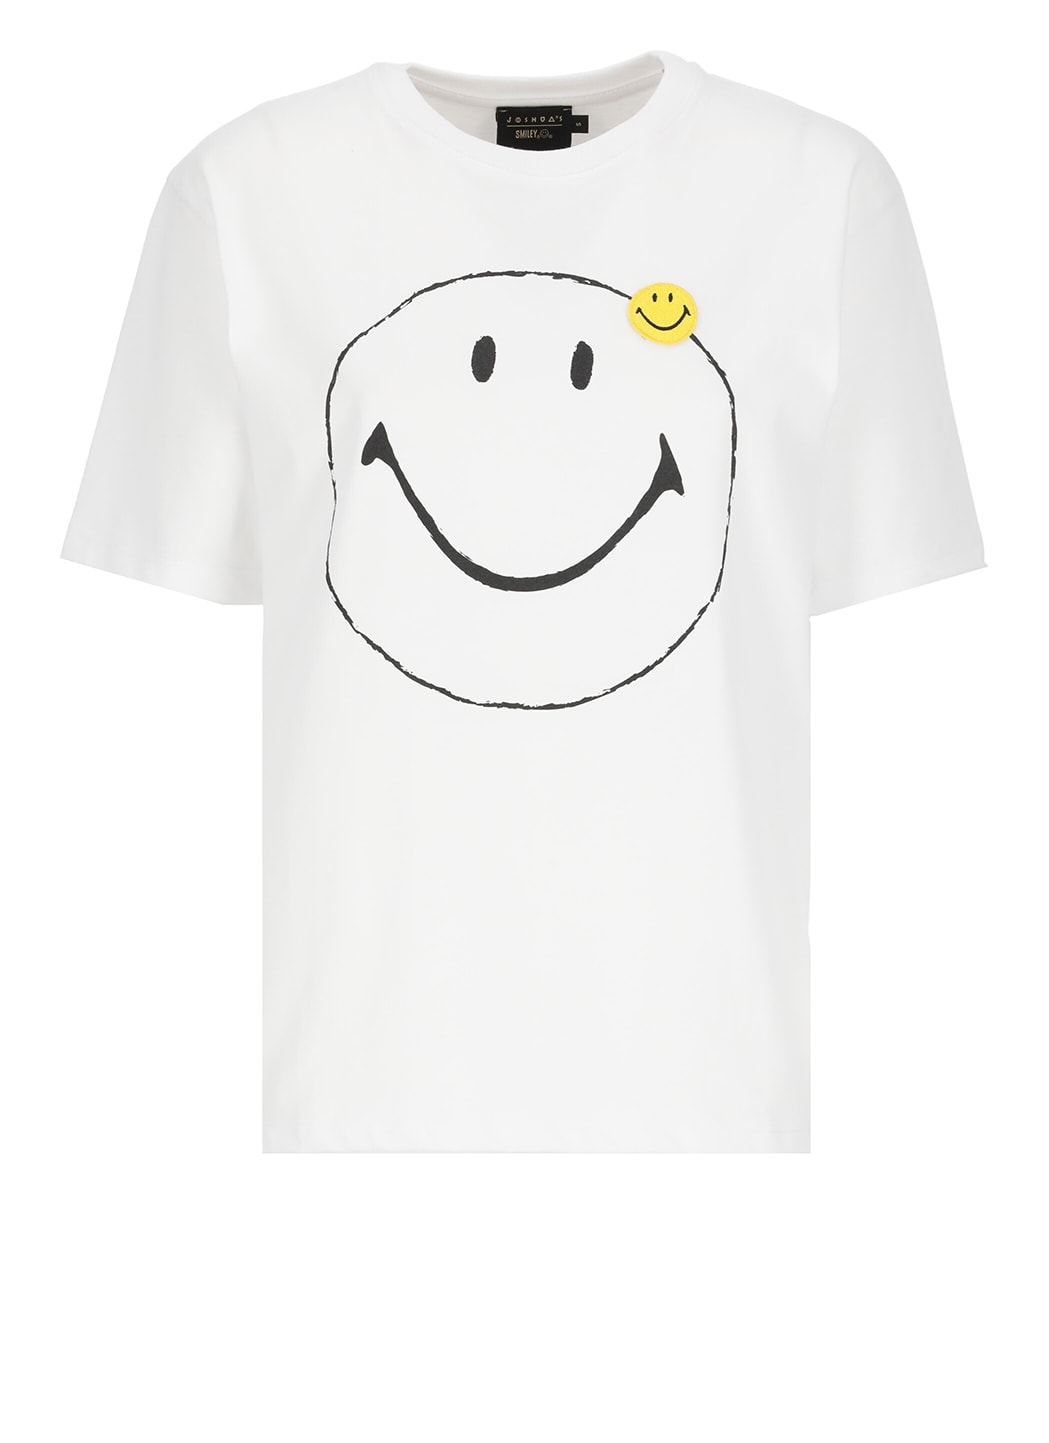 Joshua Sanders Smile T-shirt